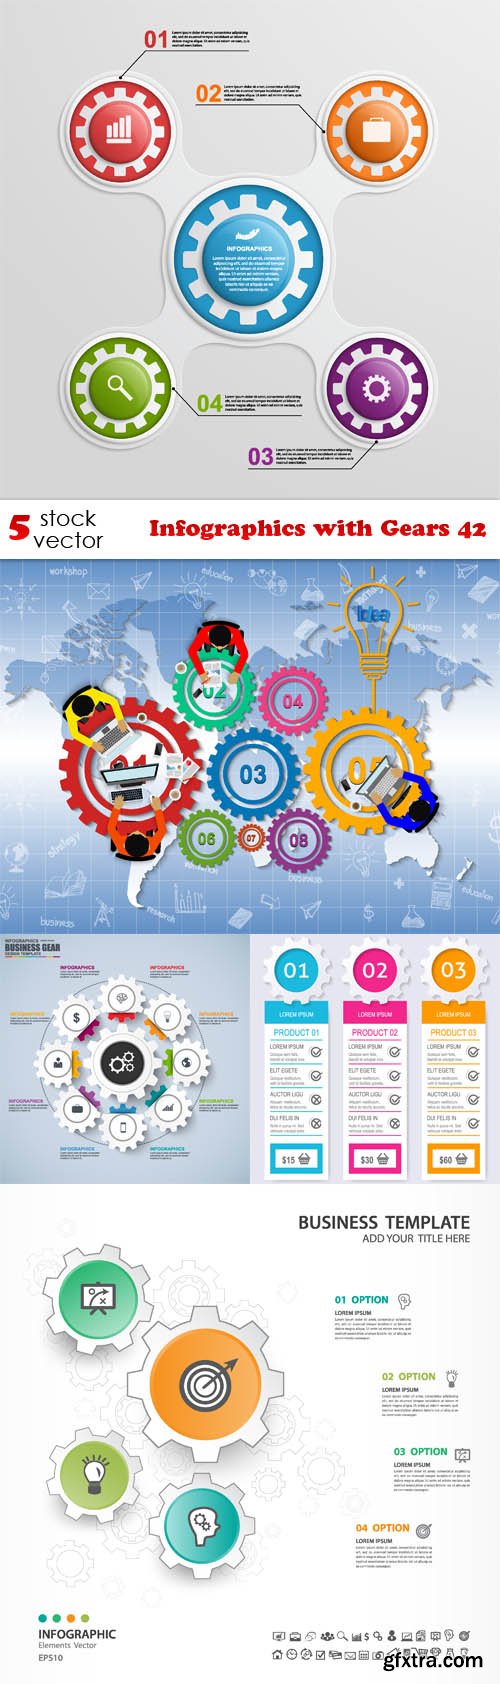 Vectors - Infographics with Gears 42